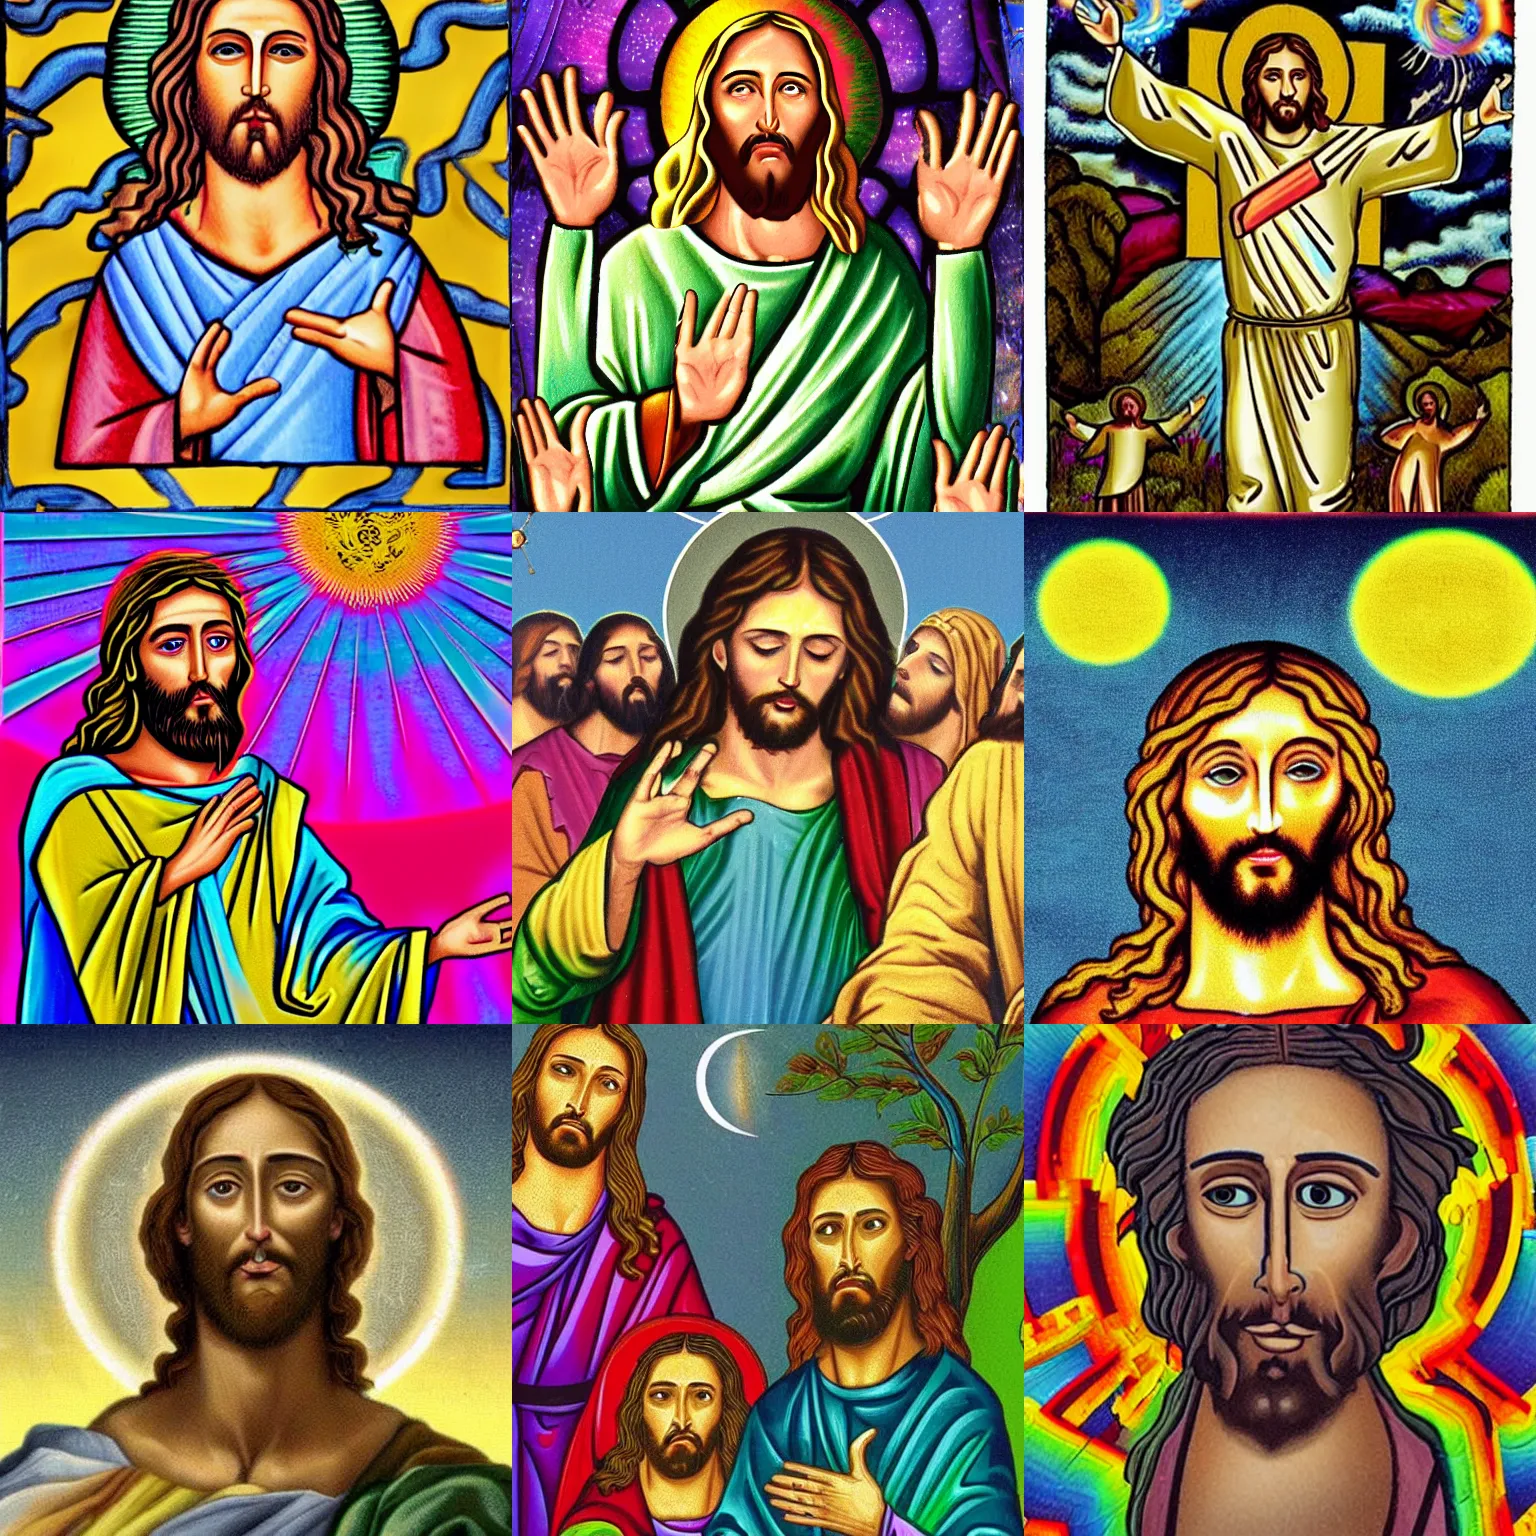 Prompt: jesus took too much acid